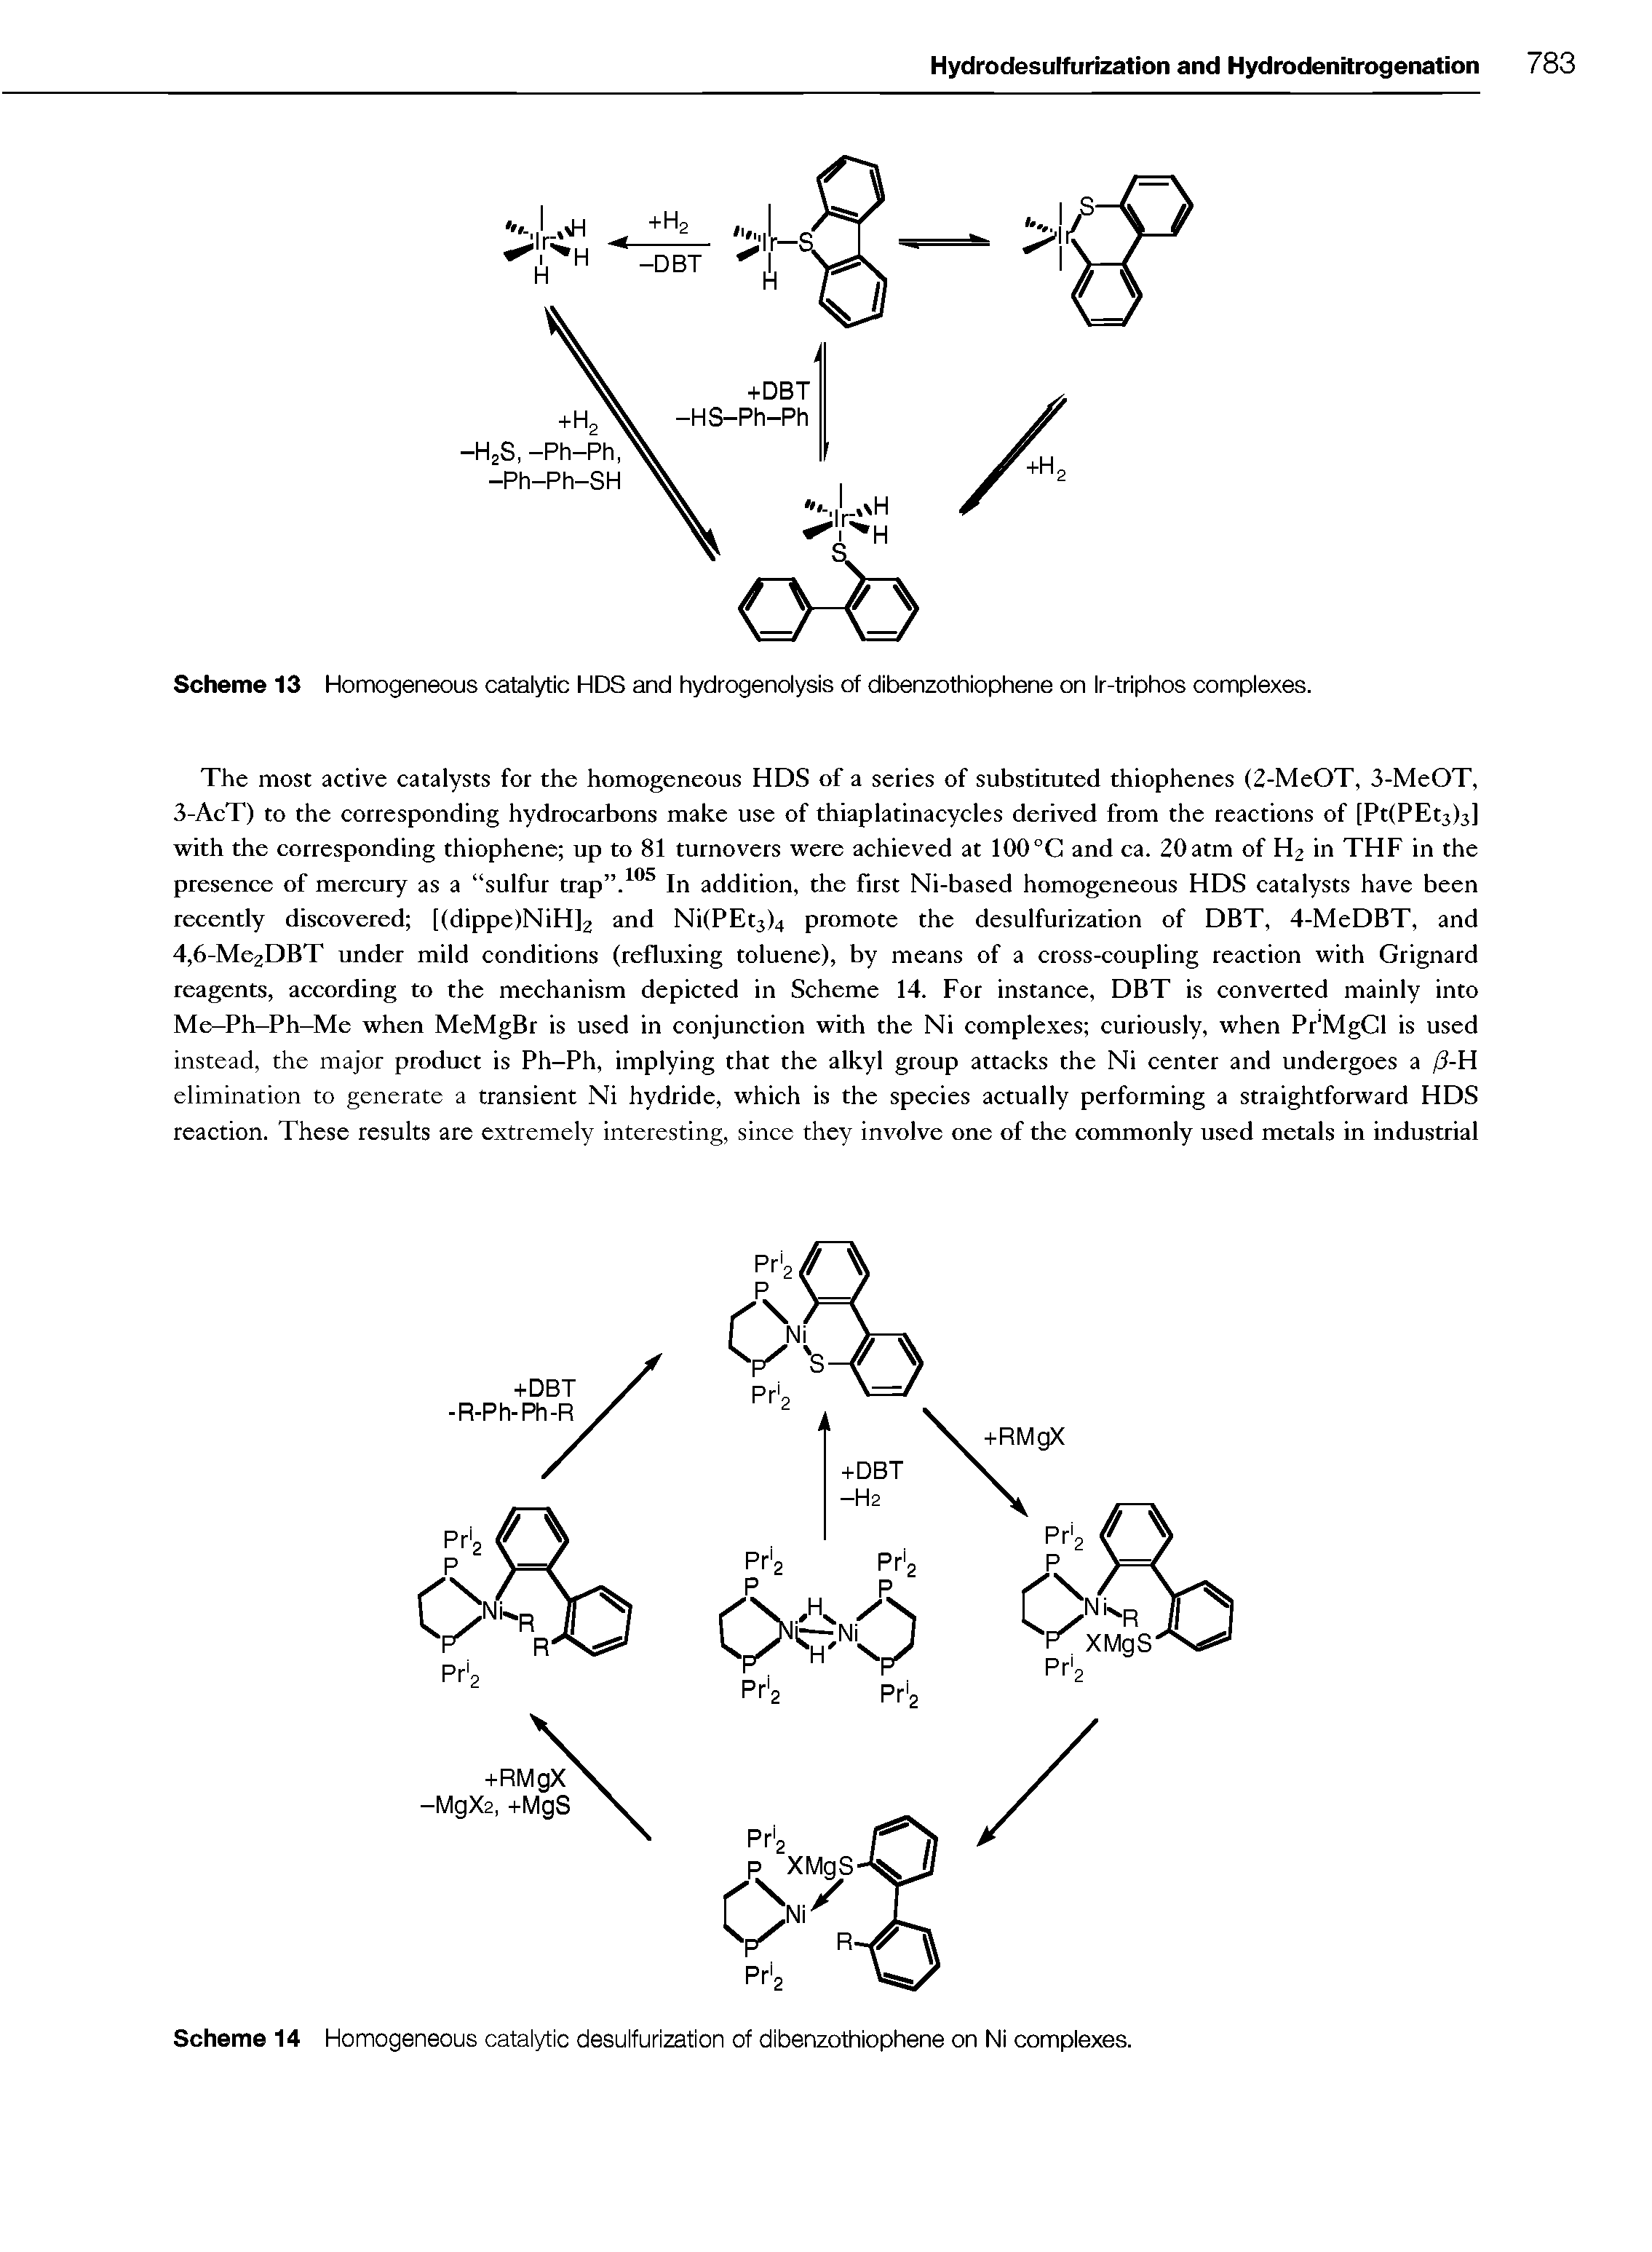 Scheme 13 Homogeneous catalytic HDS and hydrogenolysis of dibenzothiophene on Ir-triphos complexes.